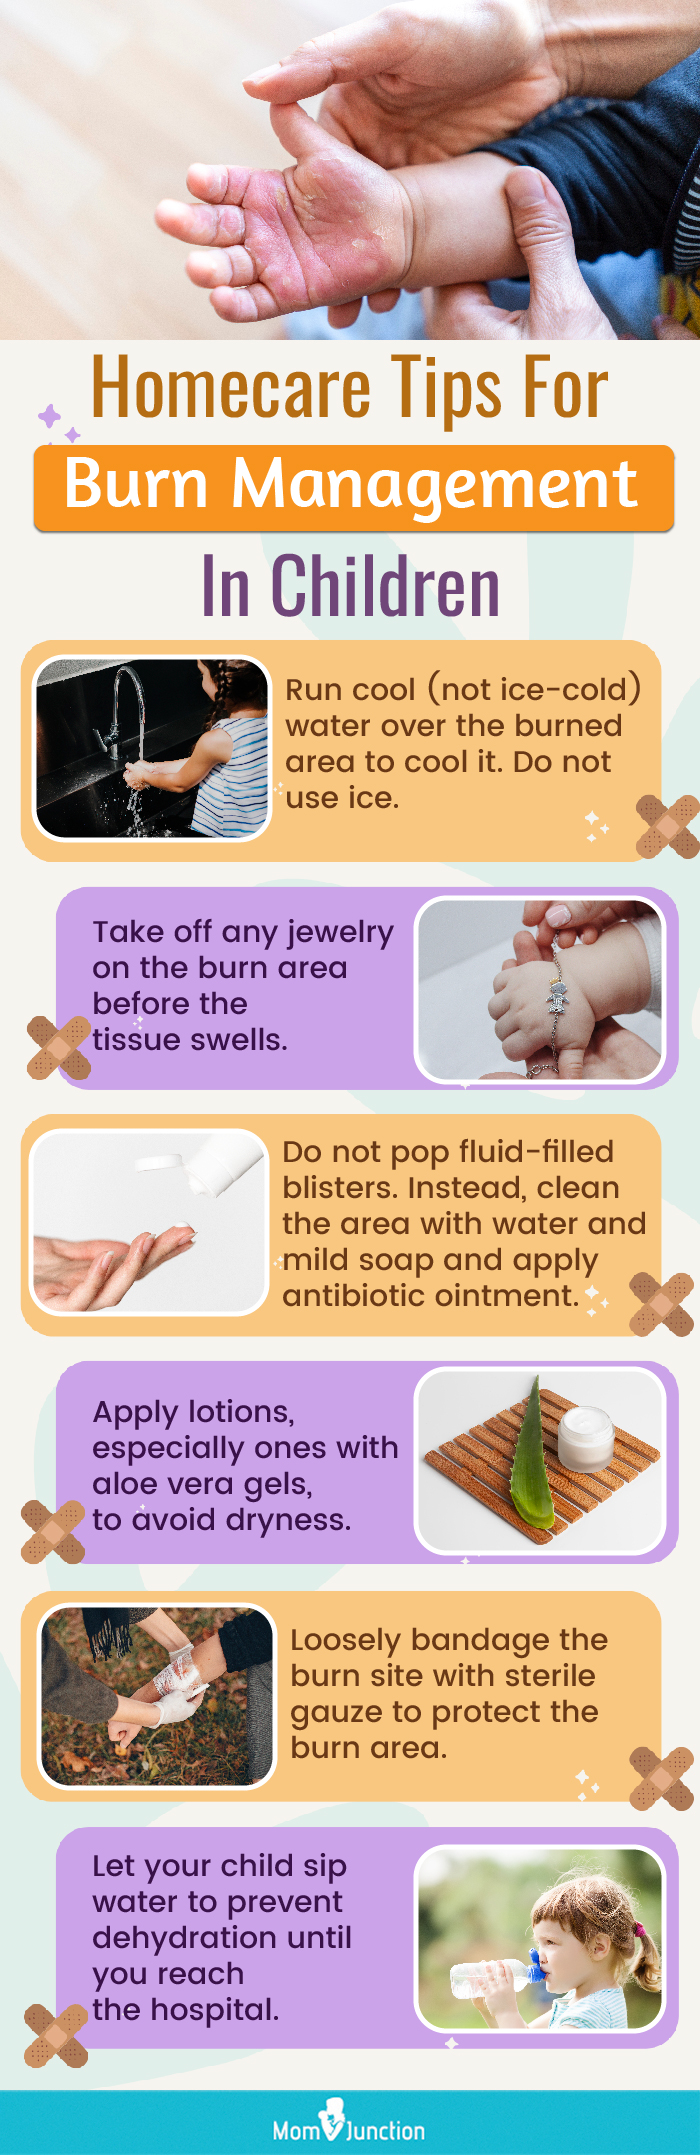 homecare tips for burn management in children (infographic)